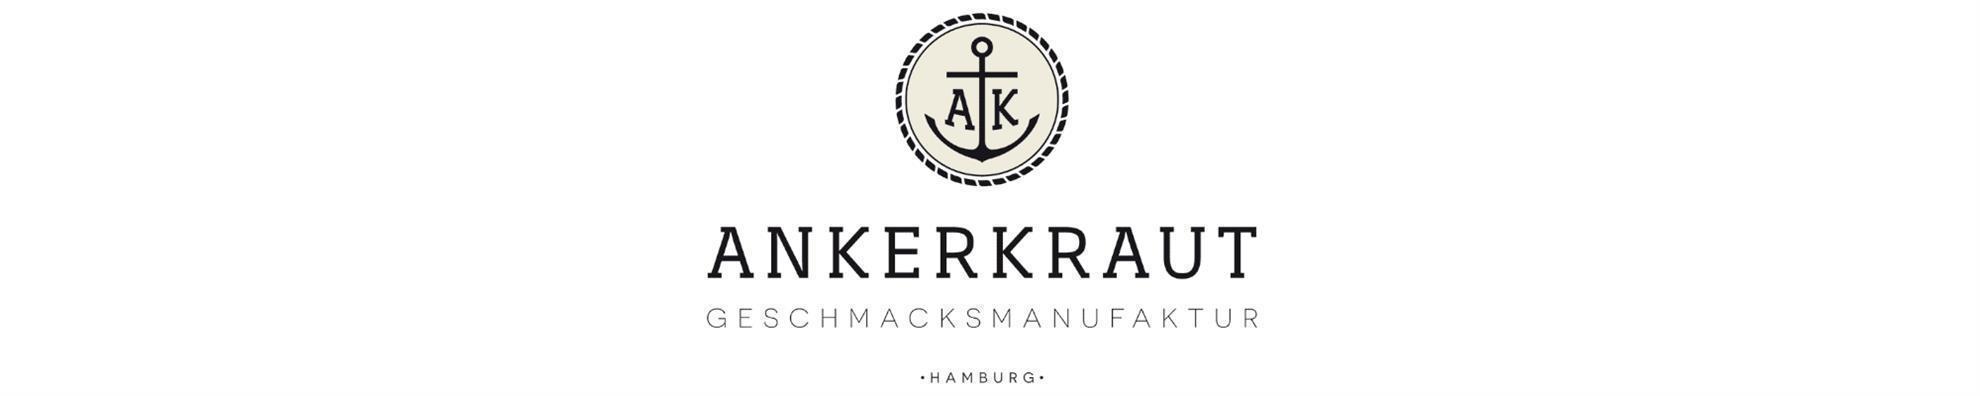 Ankerkraut - Hamburg Gunpowder